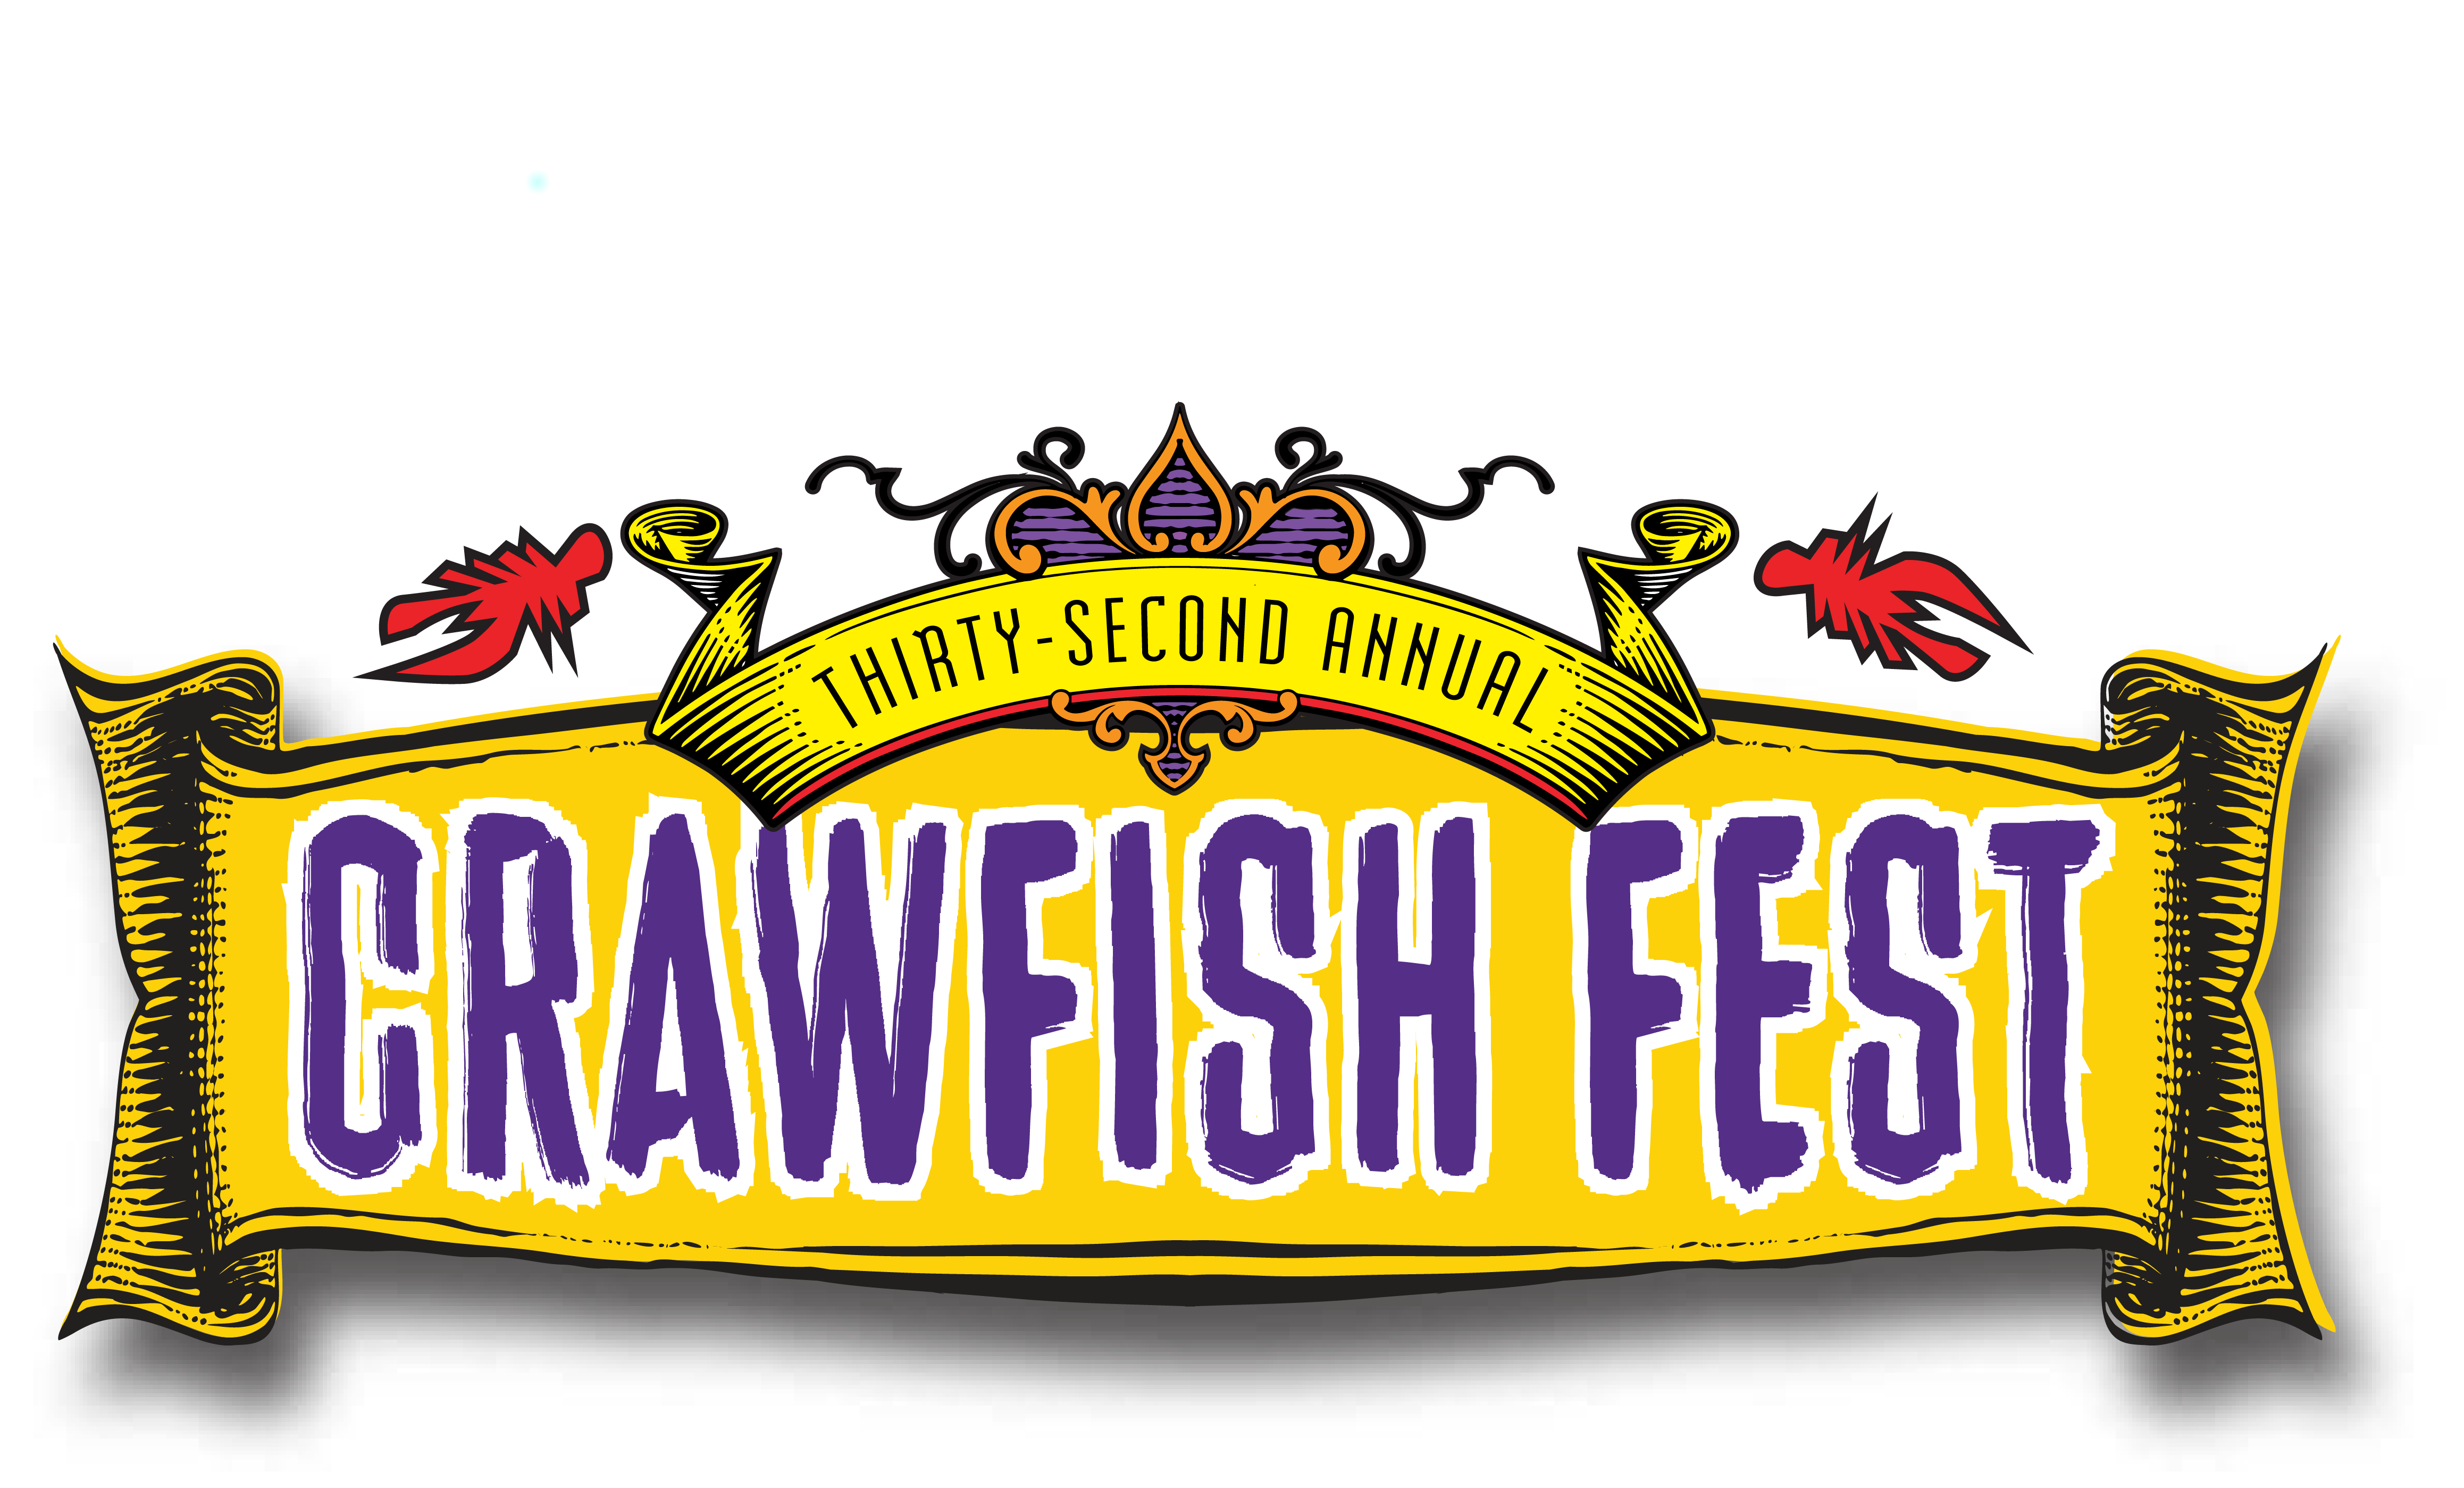 Michael Arnone's Crawfishfest